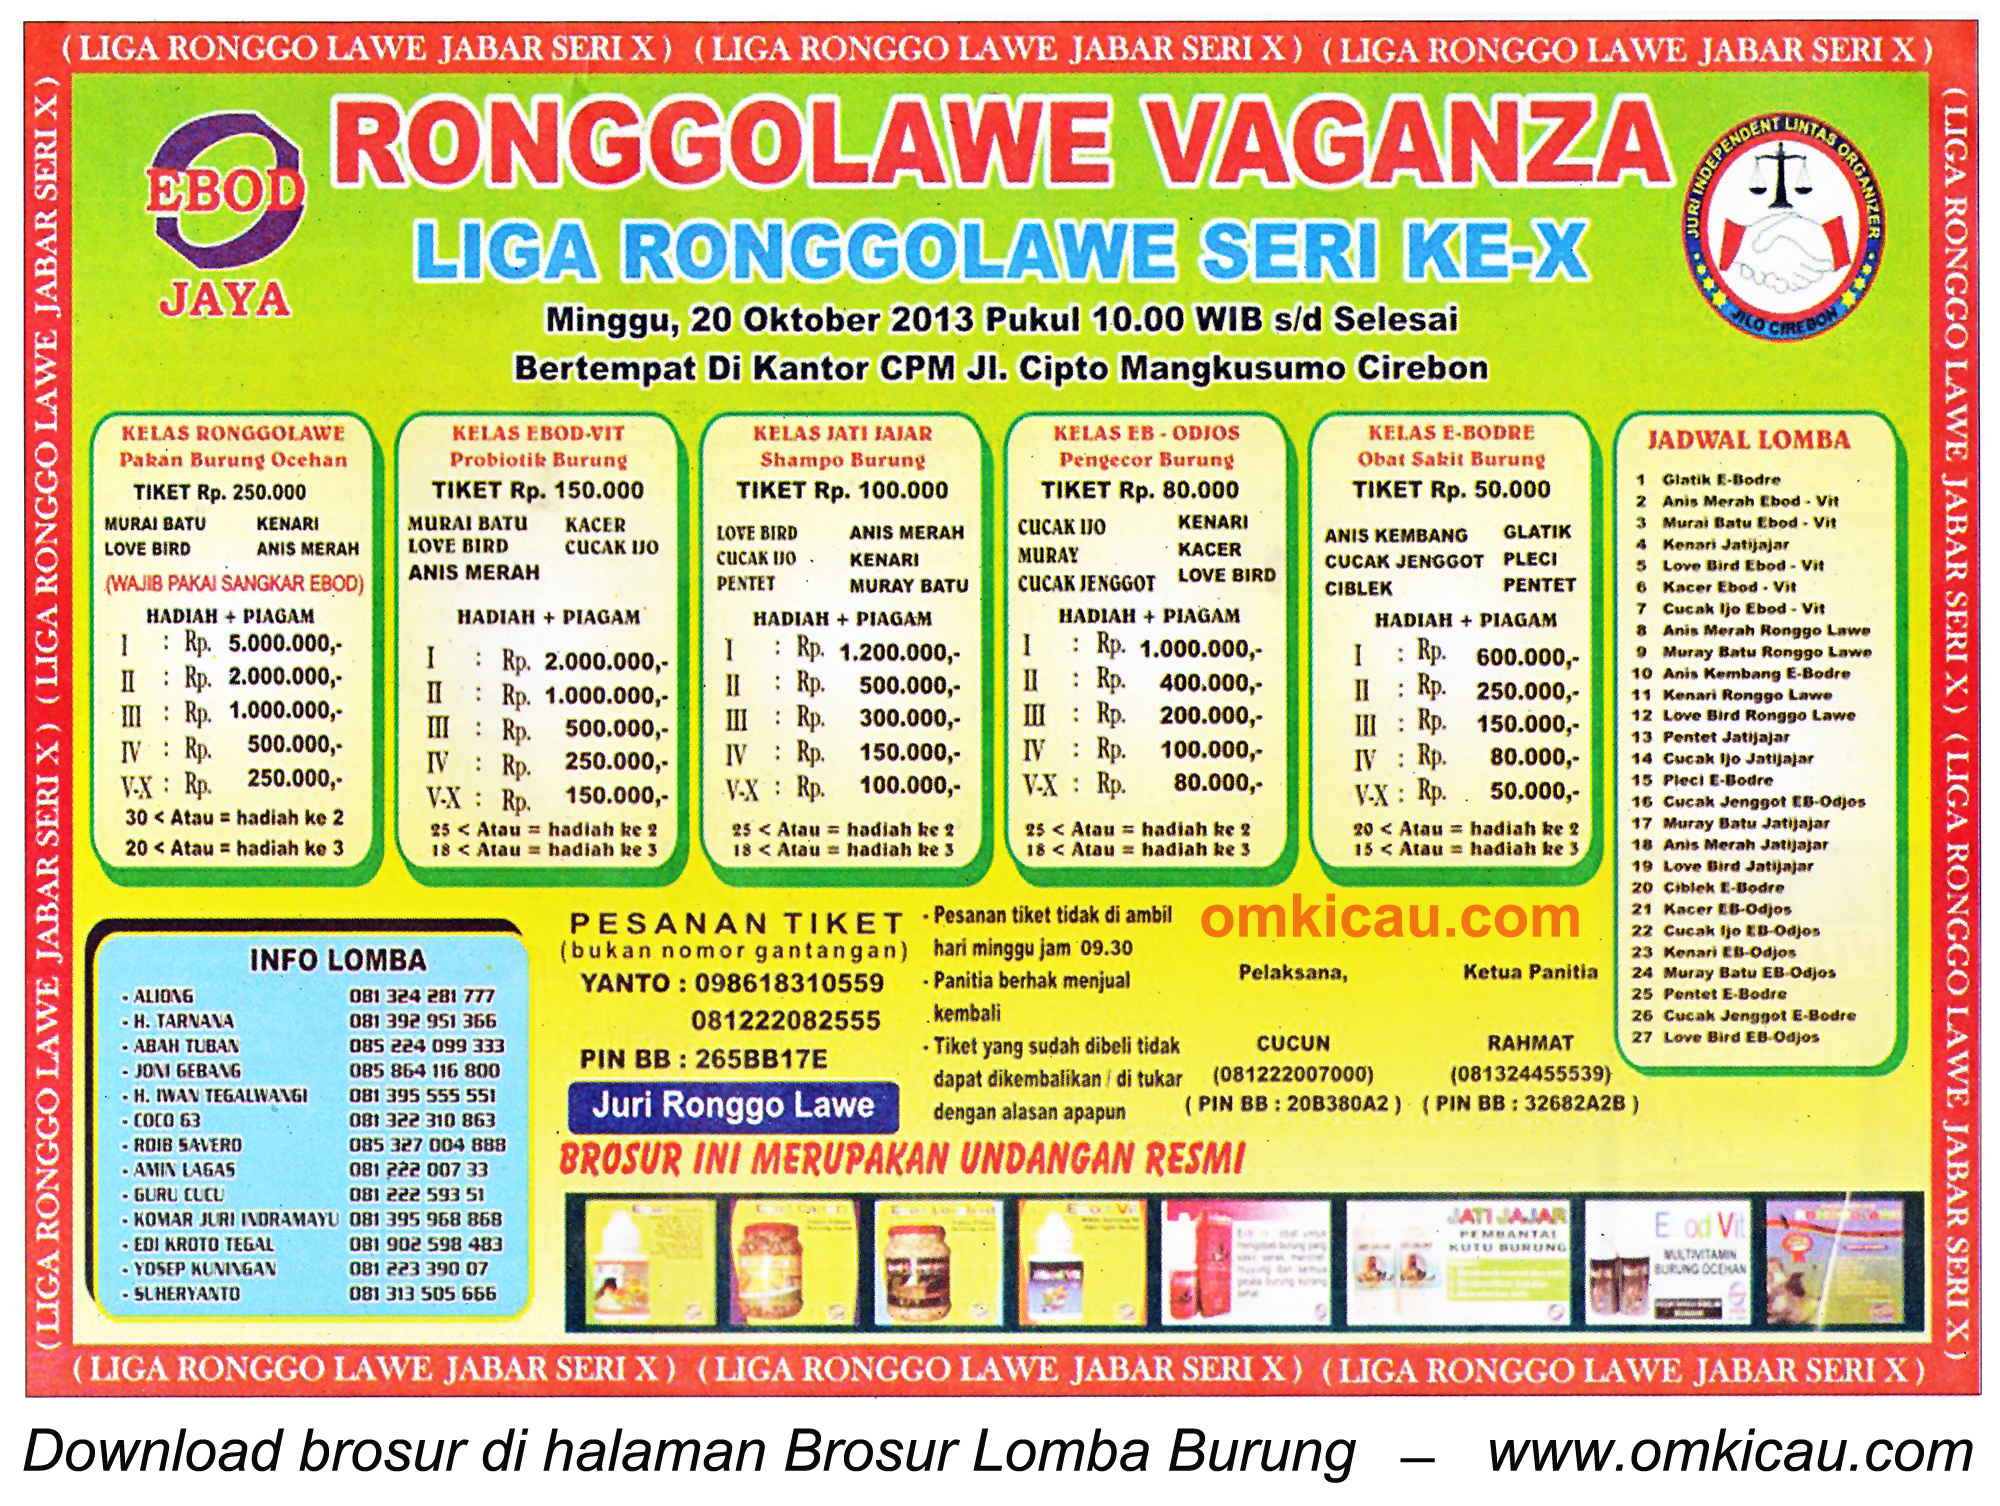 Brosur Lomba Burung Ronggolawe Vaganza (LRJ 10), Cirebon, 20 Oktober 2013